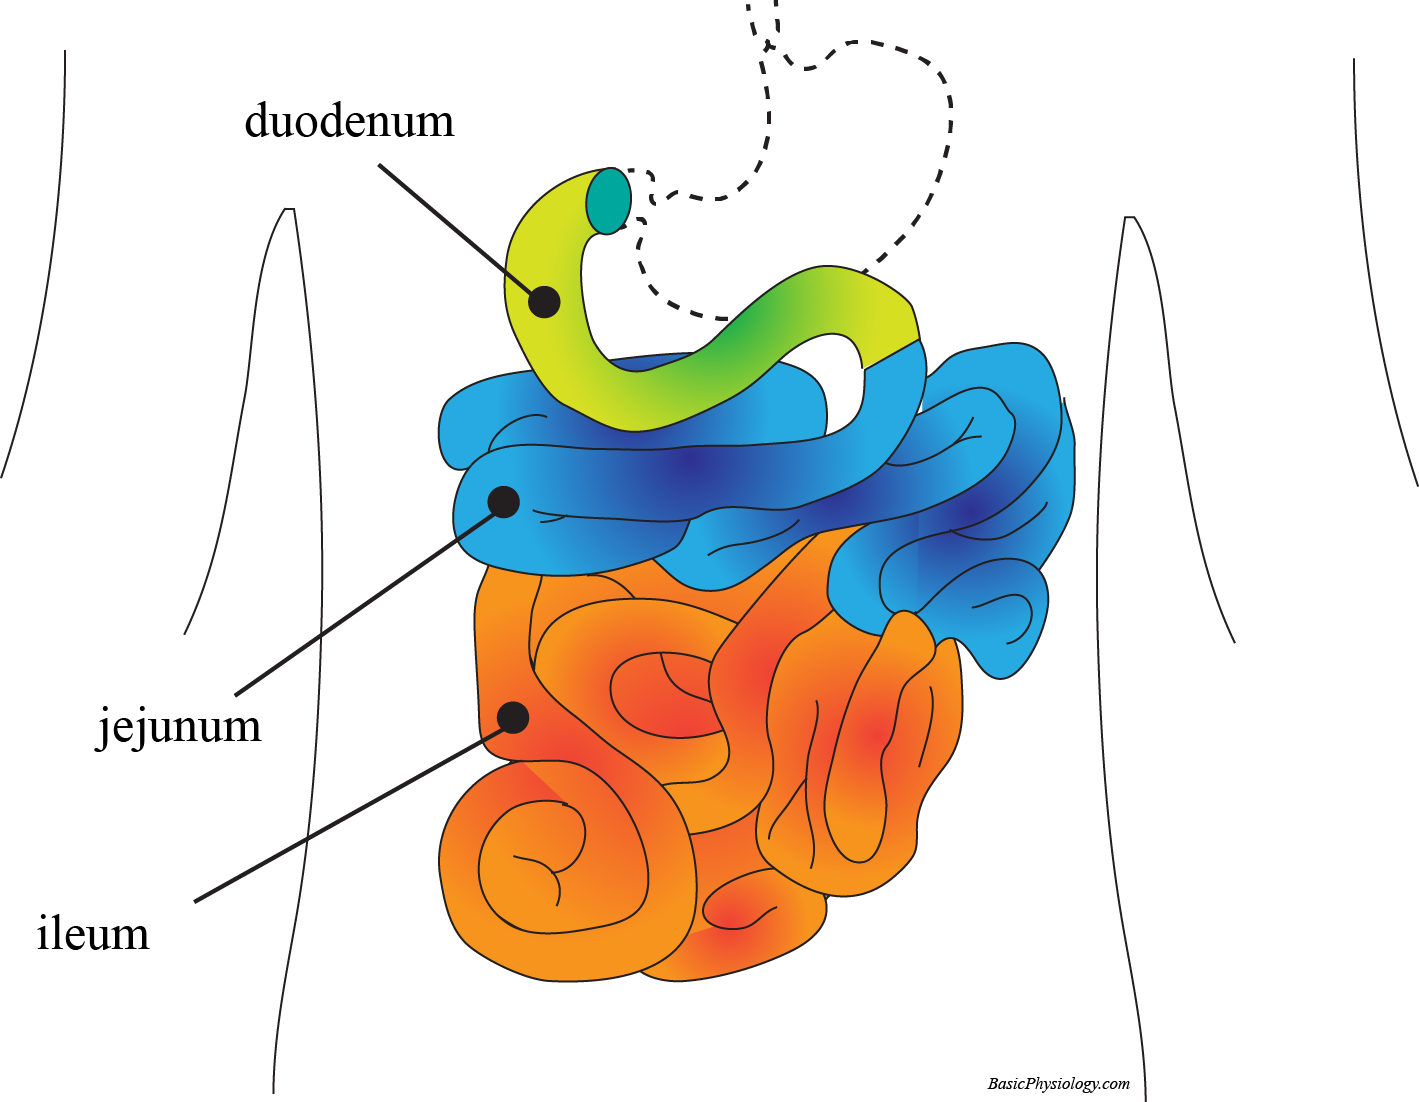 The anatomy and location of the small intestine; duodenum, jejunum and ileum